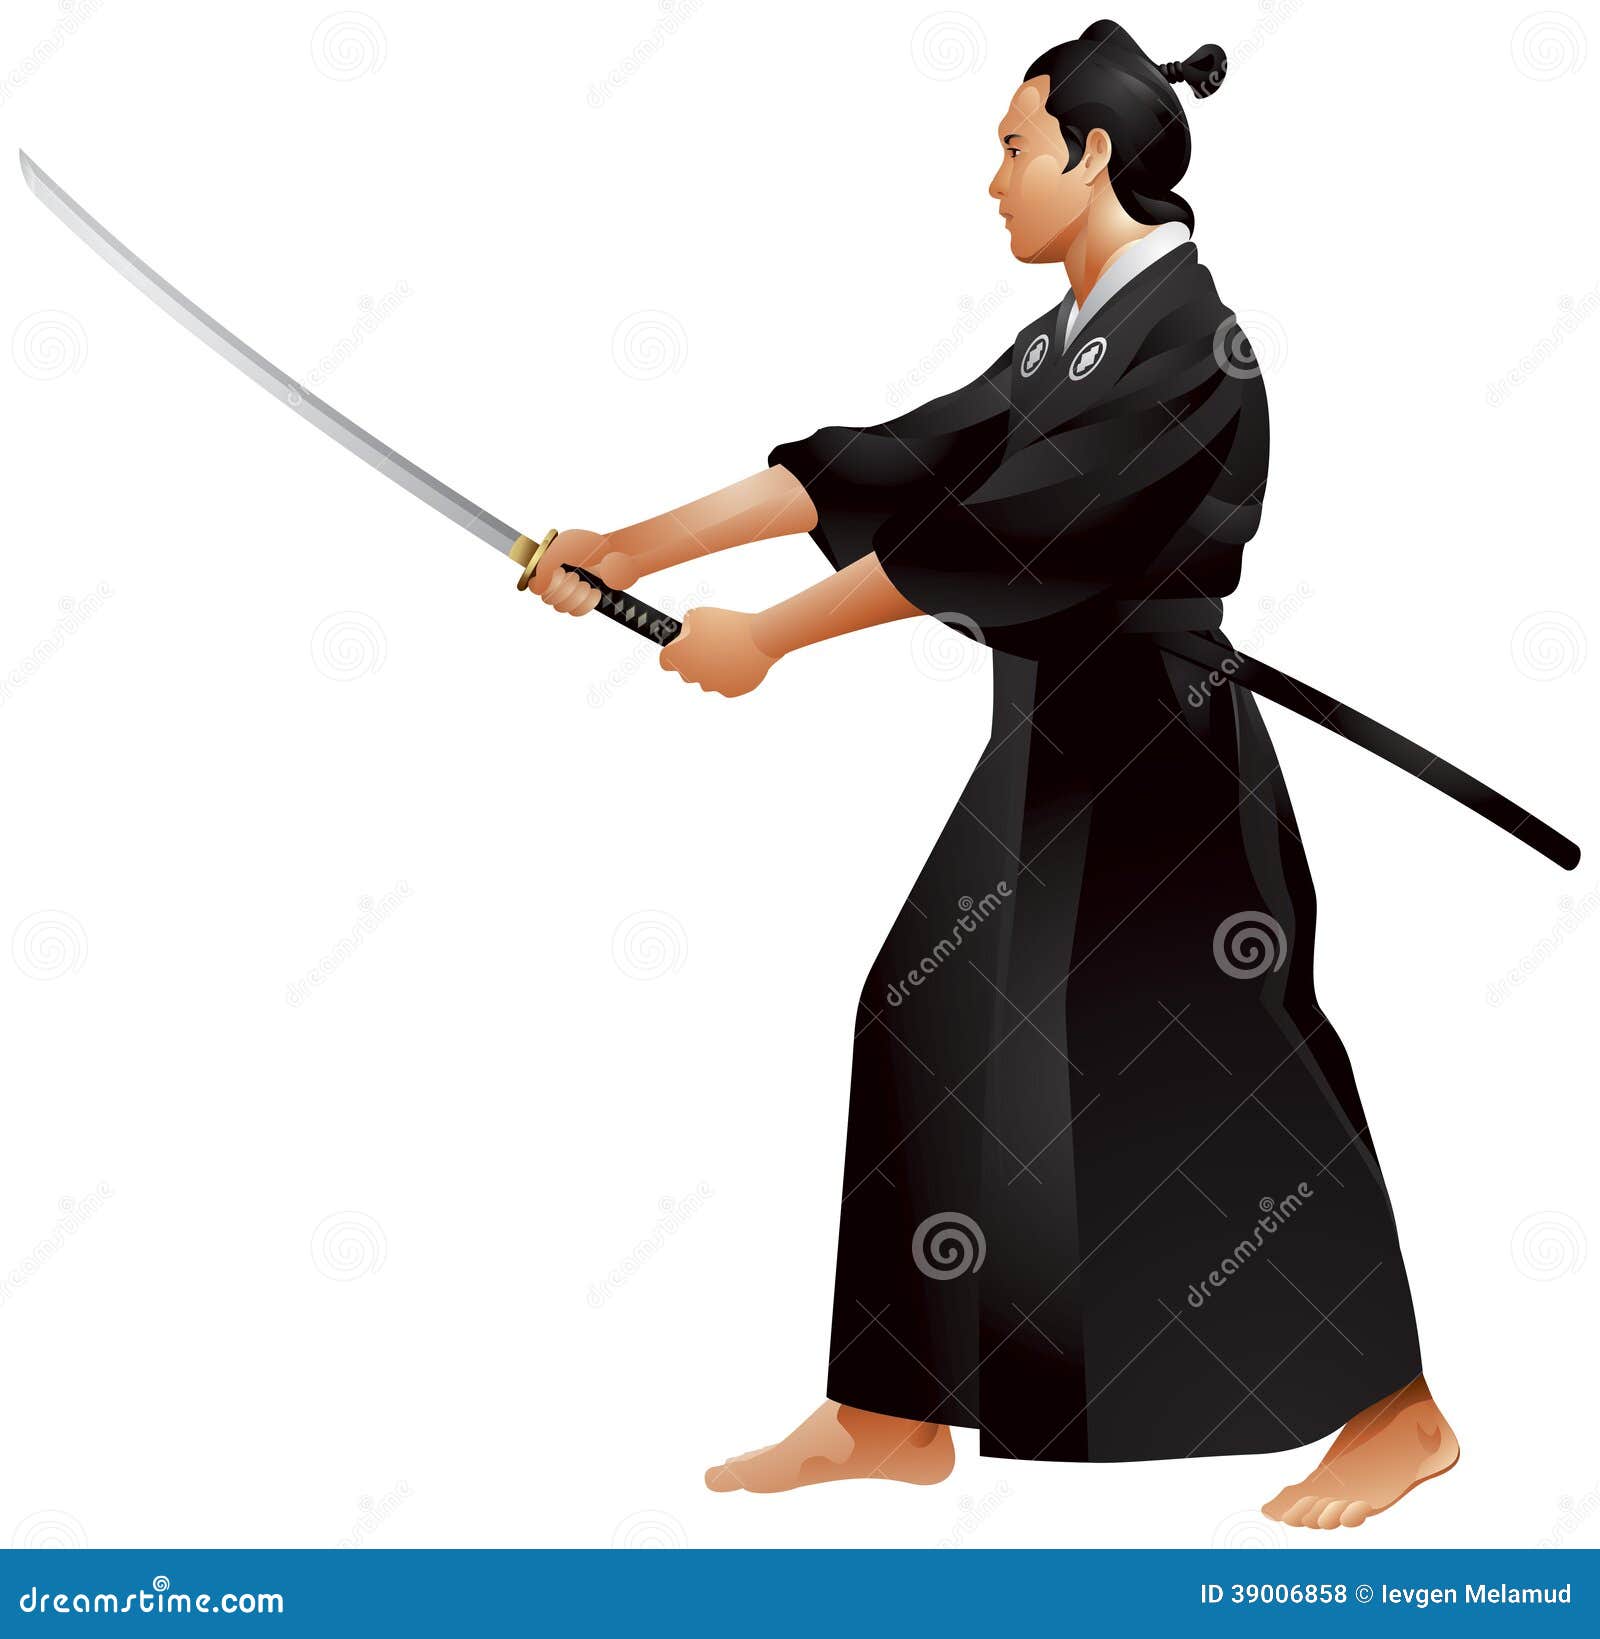 The clash of swordsmen [Hiro vs Kagetane] Samurai-del-japon%C3%A9s-de-kenjutsu-chudan-39006858